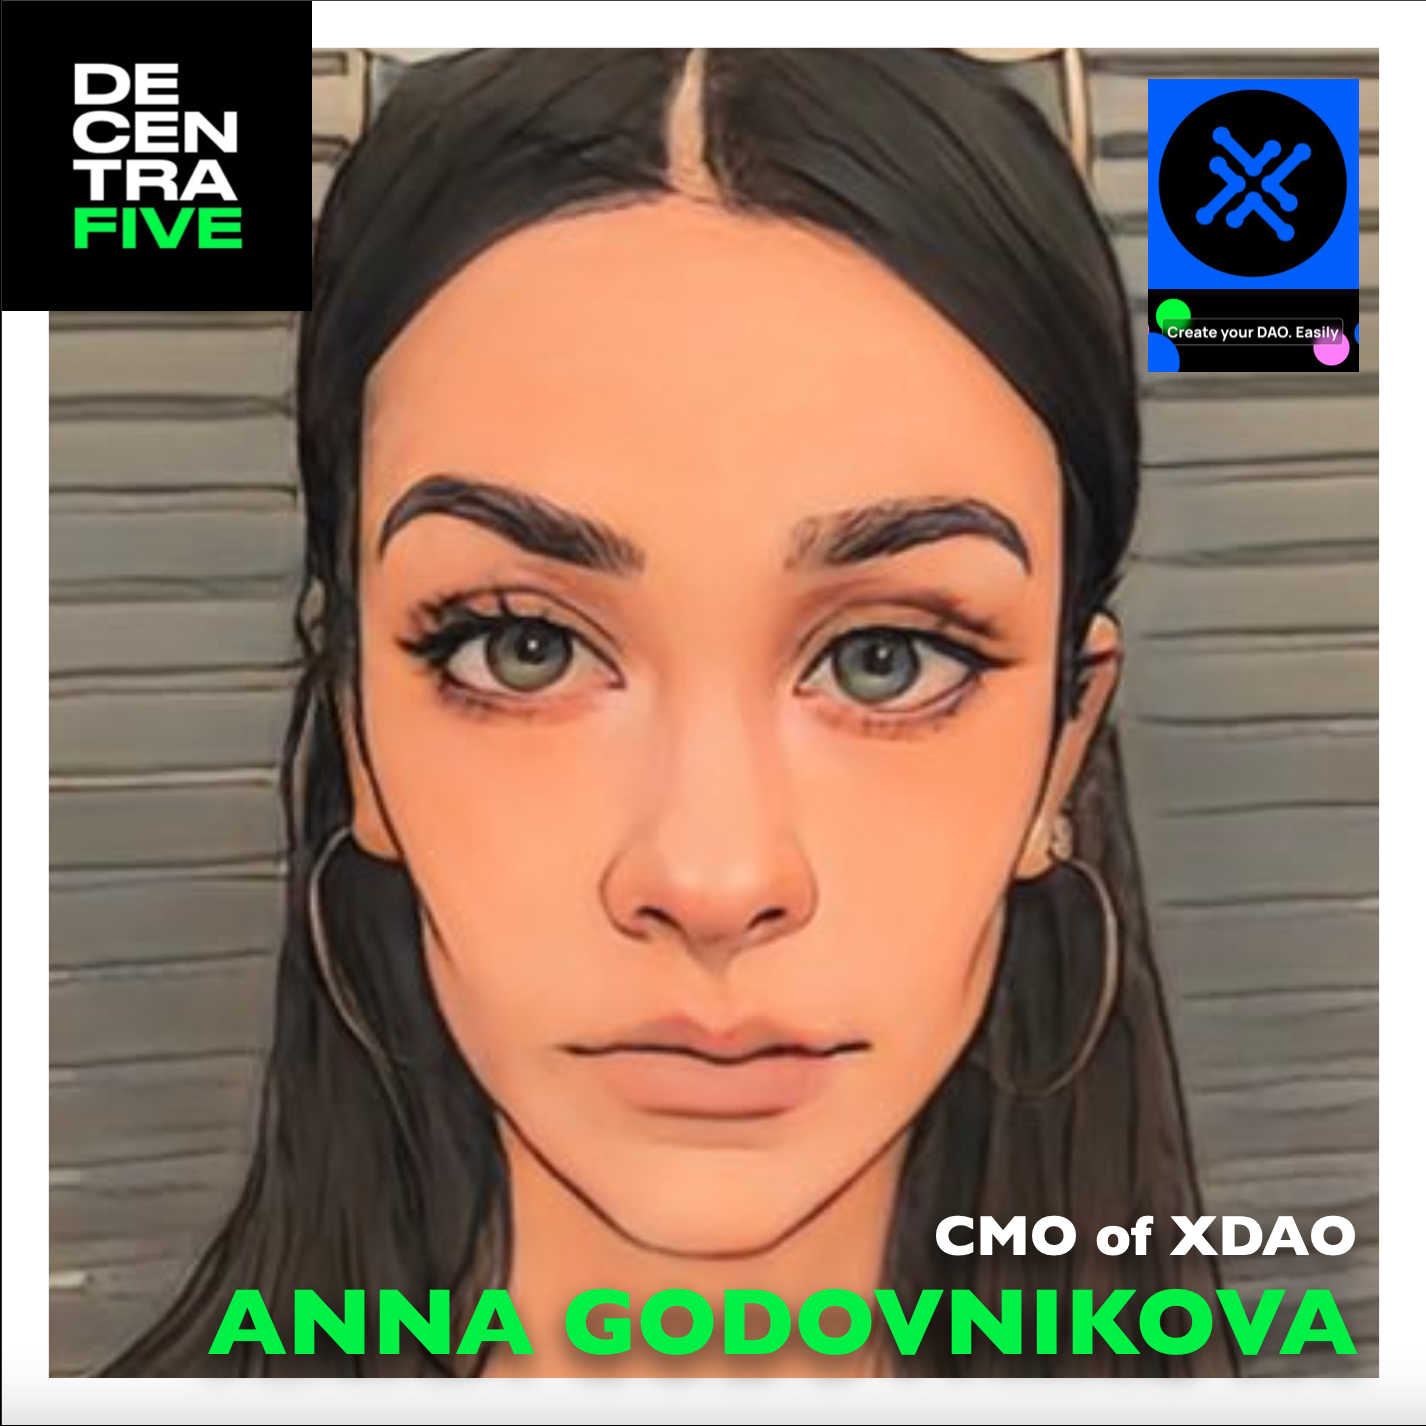 Anna Godovnikova (@godovnikovaa), Chief Marketing Officer of @XDAOapp, on @DECENTRAFIVE | hosted by Jason Dukes (@LiveSent)